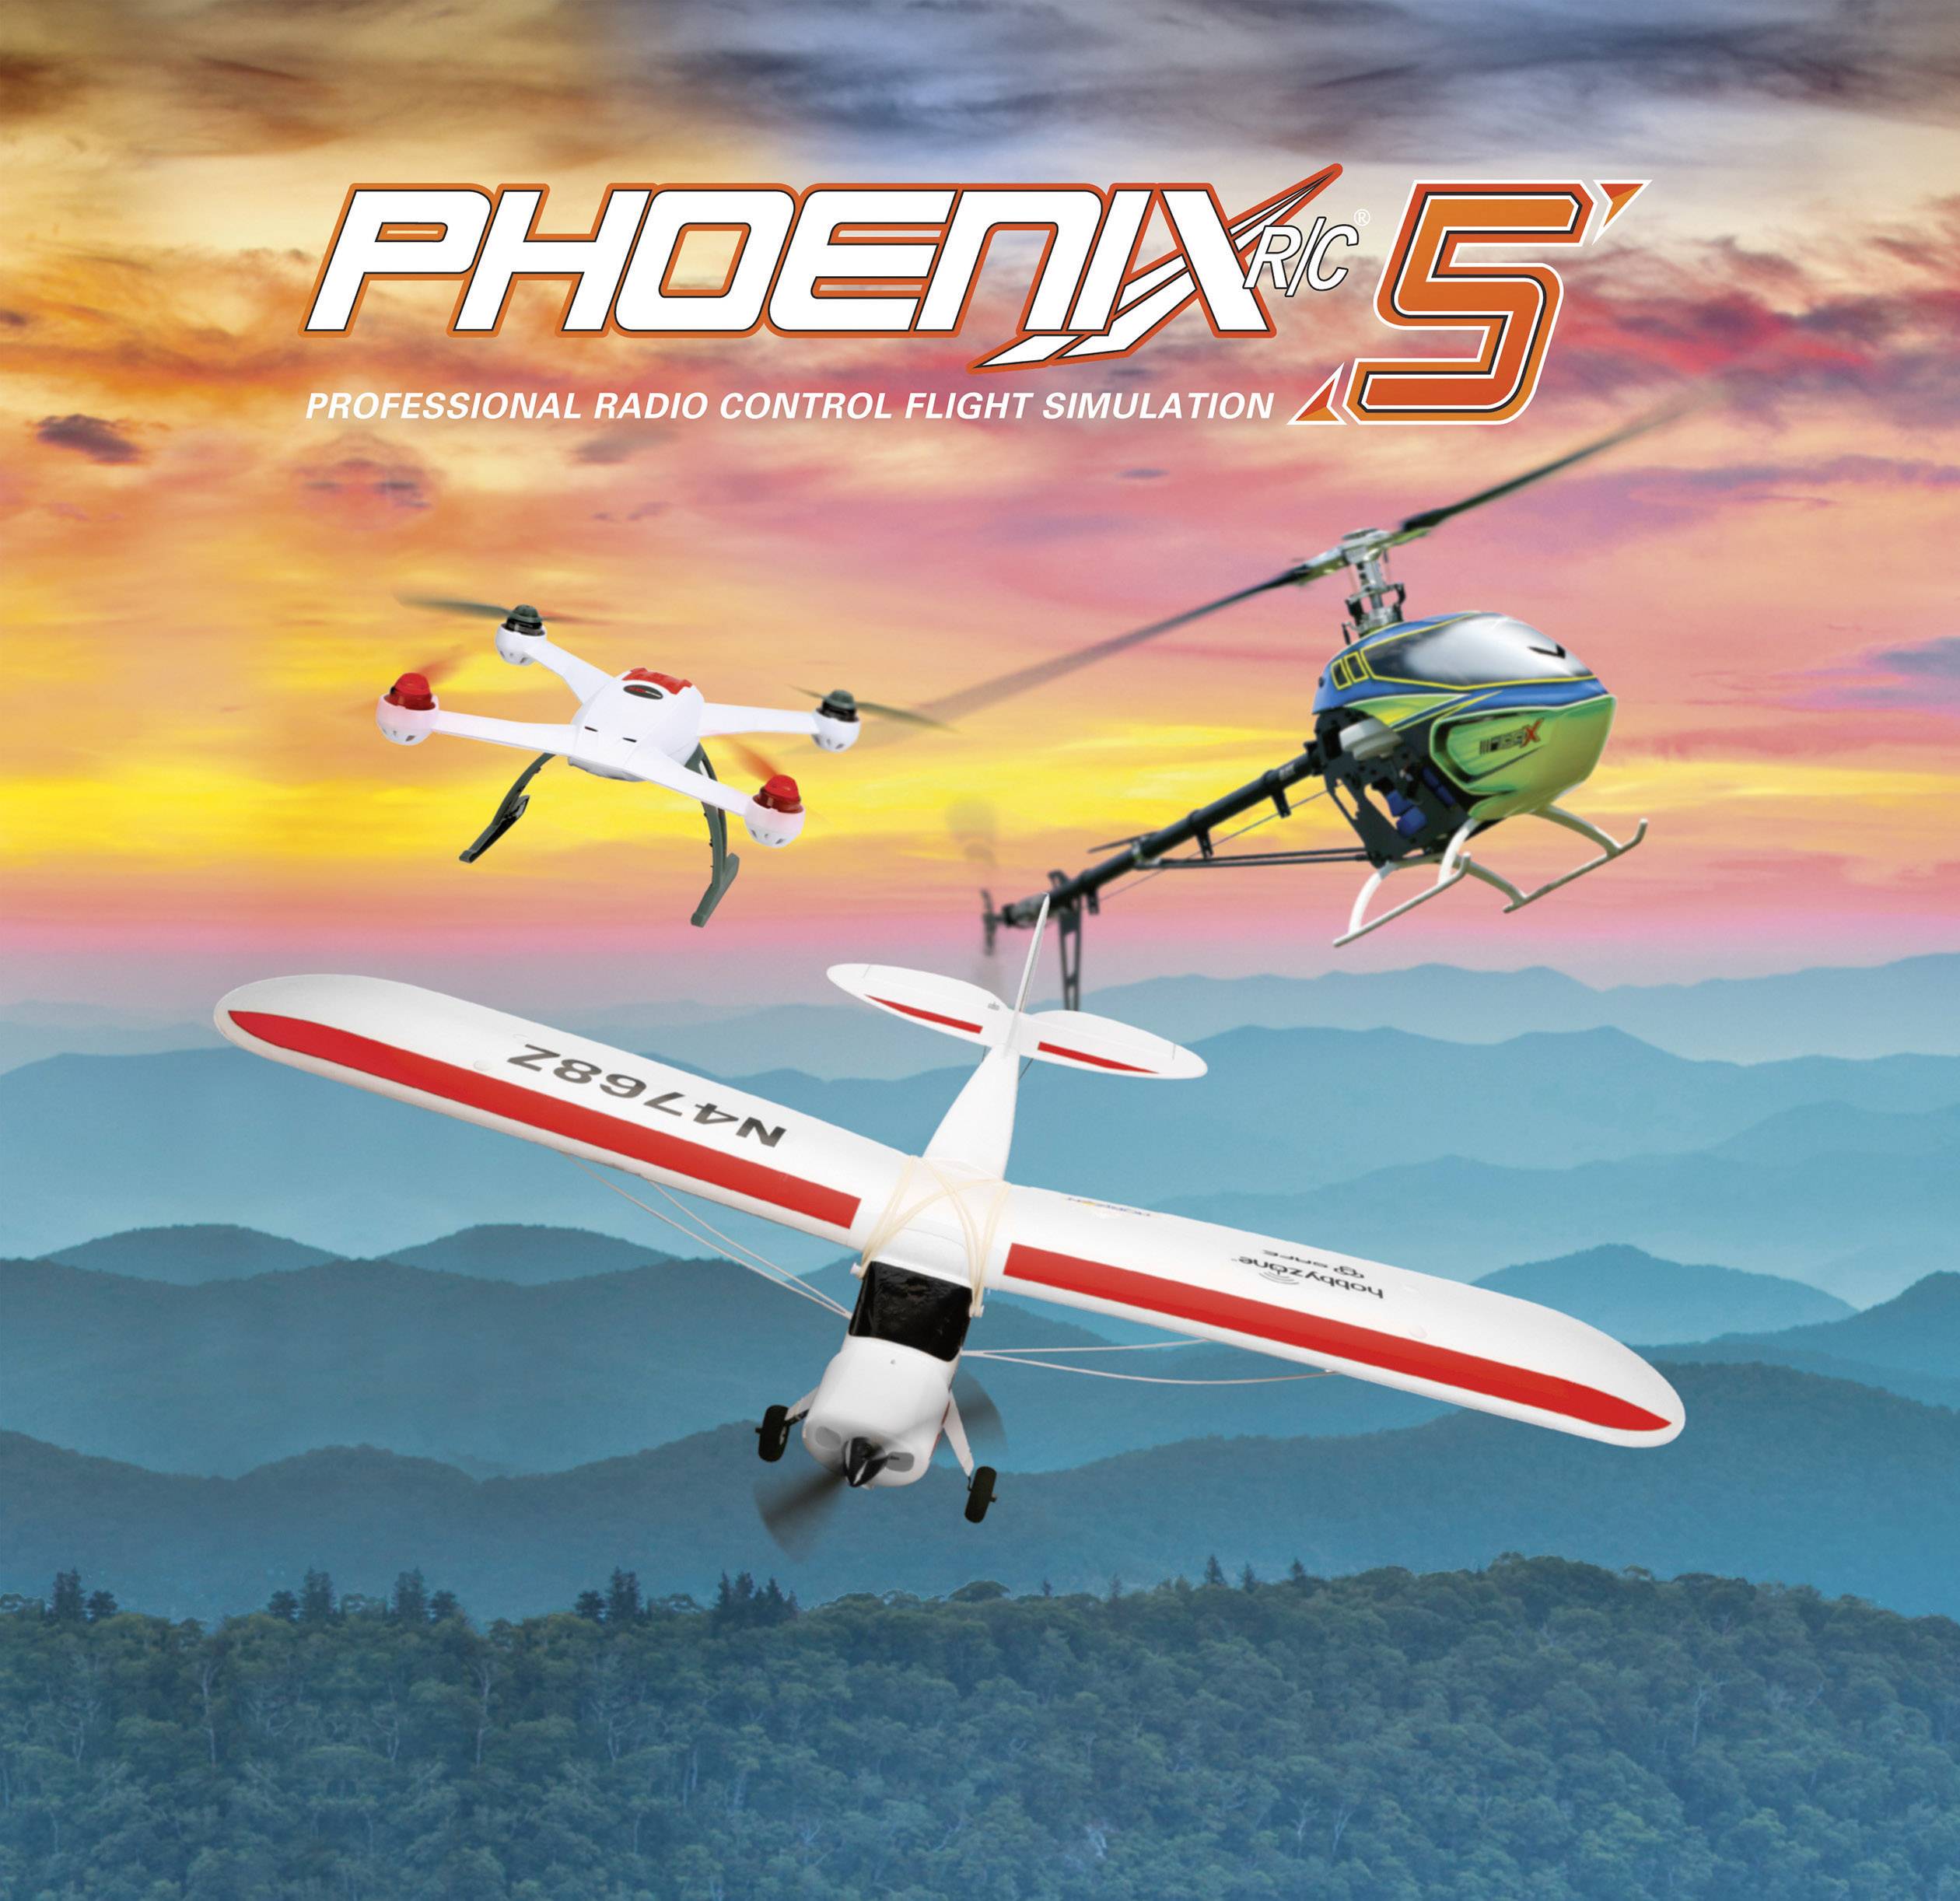 phoenix rc flight simulator review